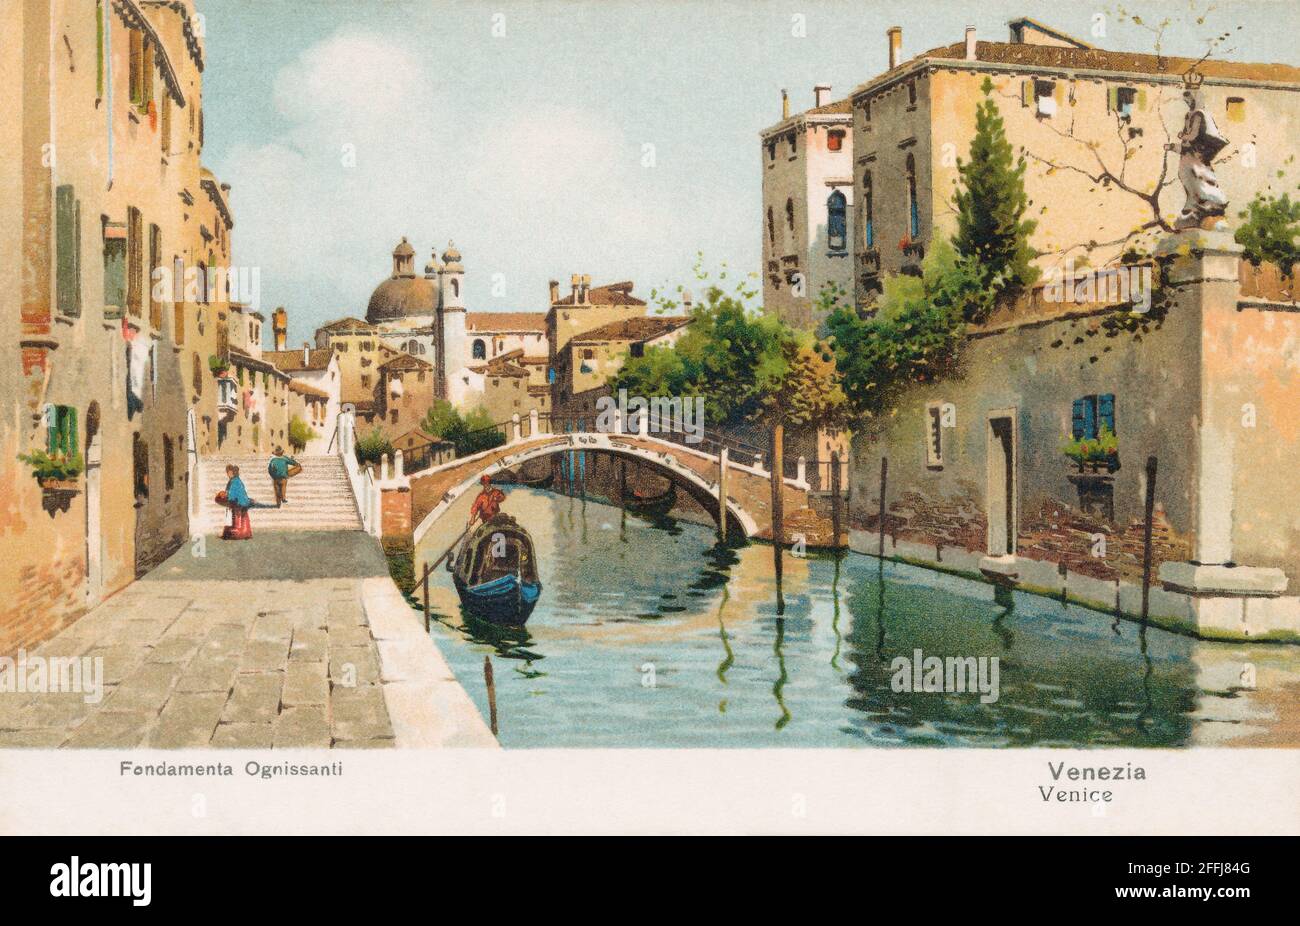 Italienische Vintage-Postkarte der Fondamenta Ognissanti und des Rio del Ognissanti in Venedig, Italien. Stockfoto